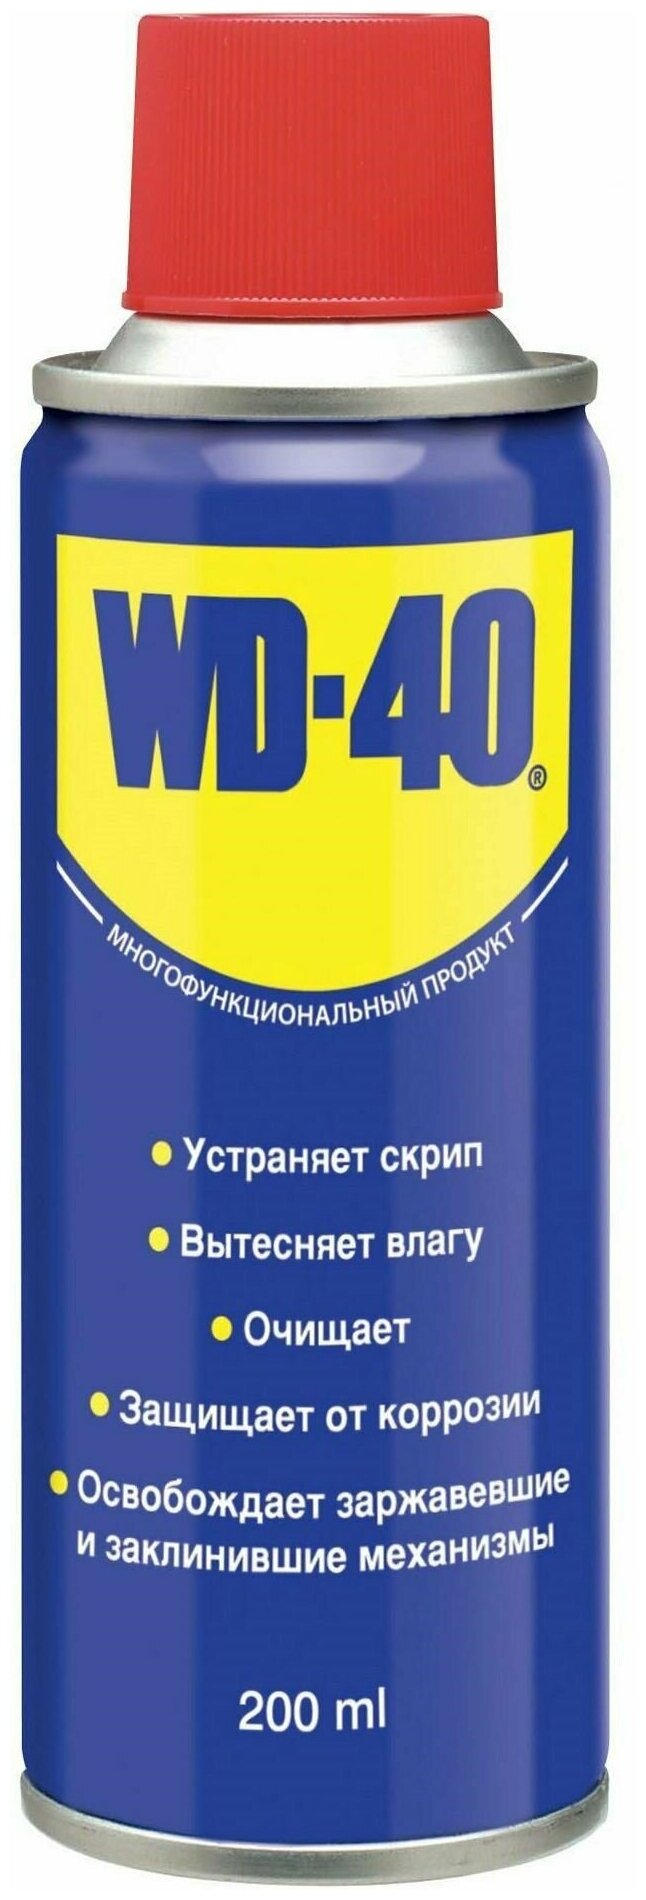 Wd-40 200Мл (Многофункц. универсальная Смазка) Wd0001 WD-40 арт. WD0001